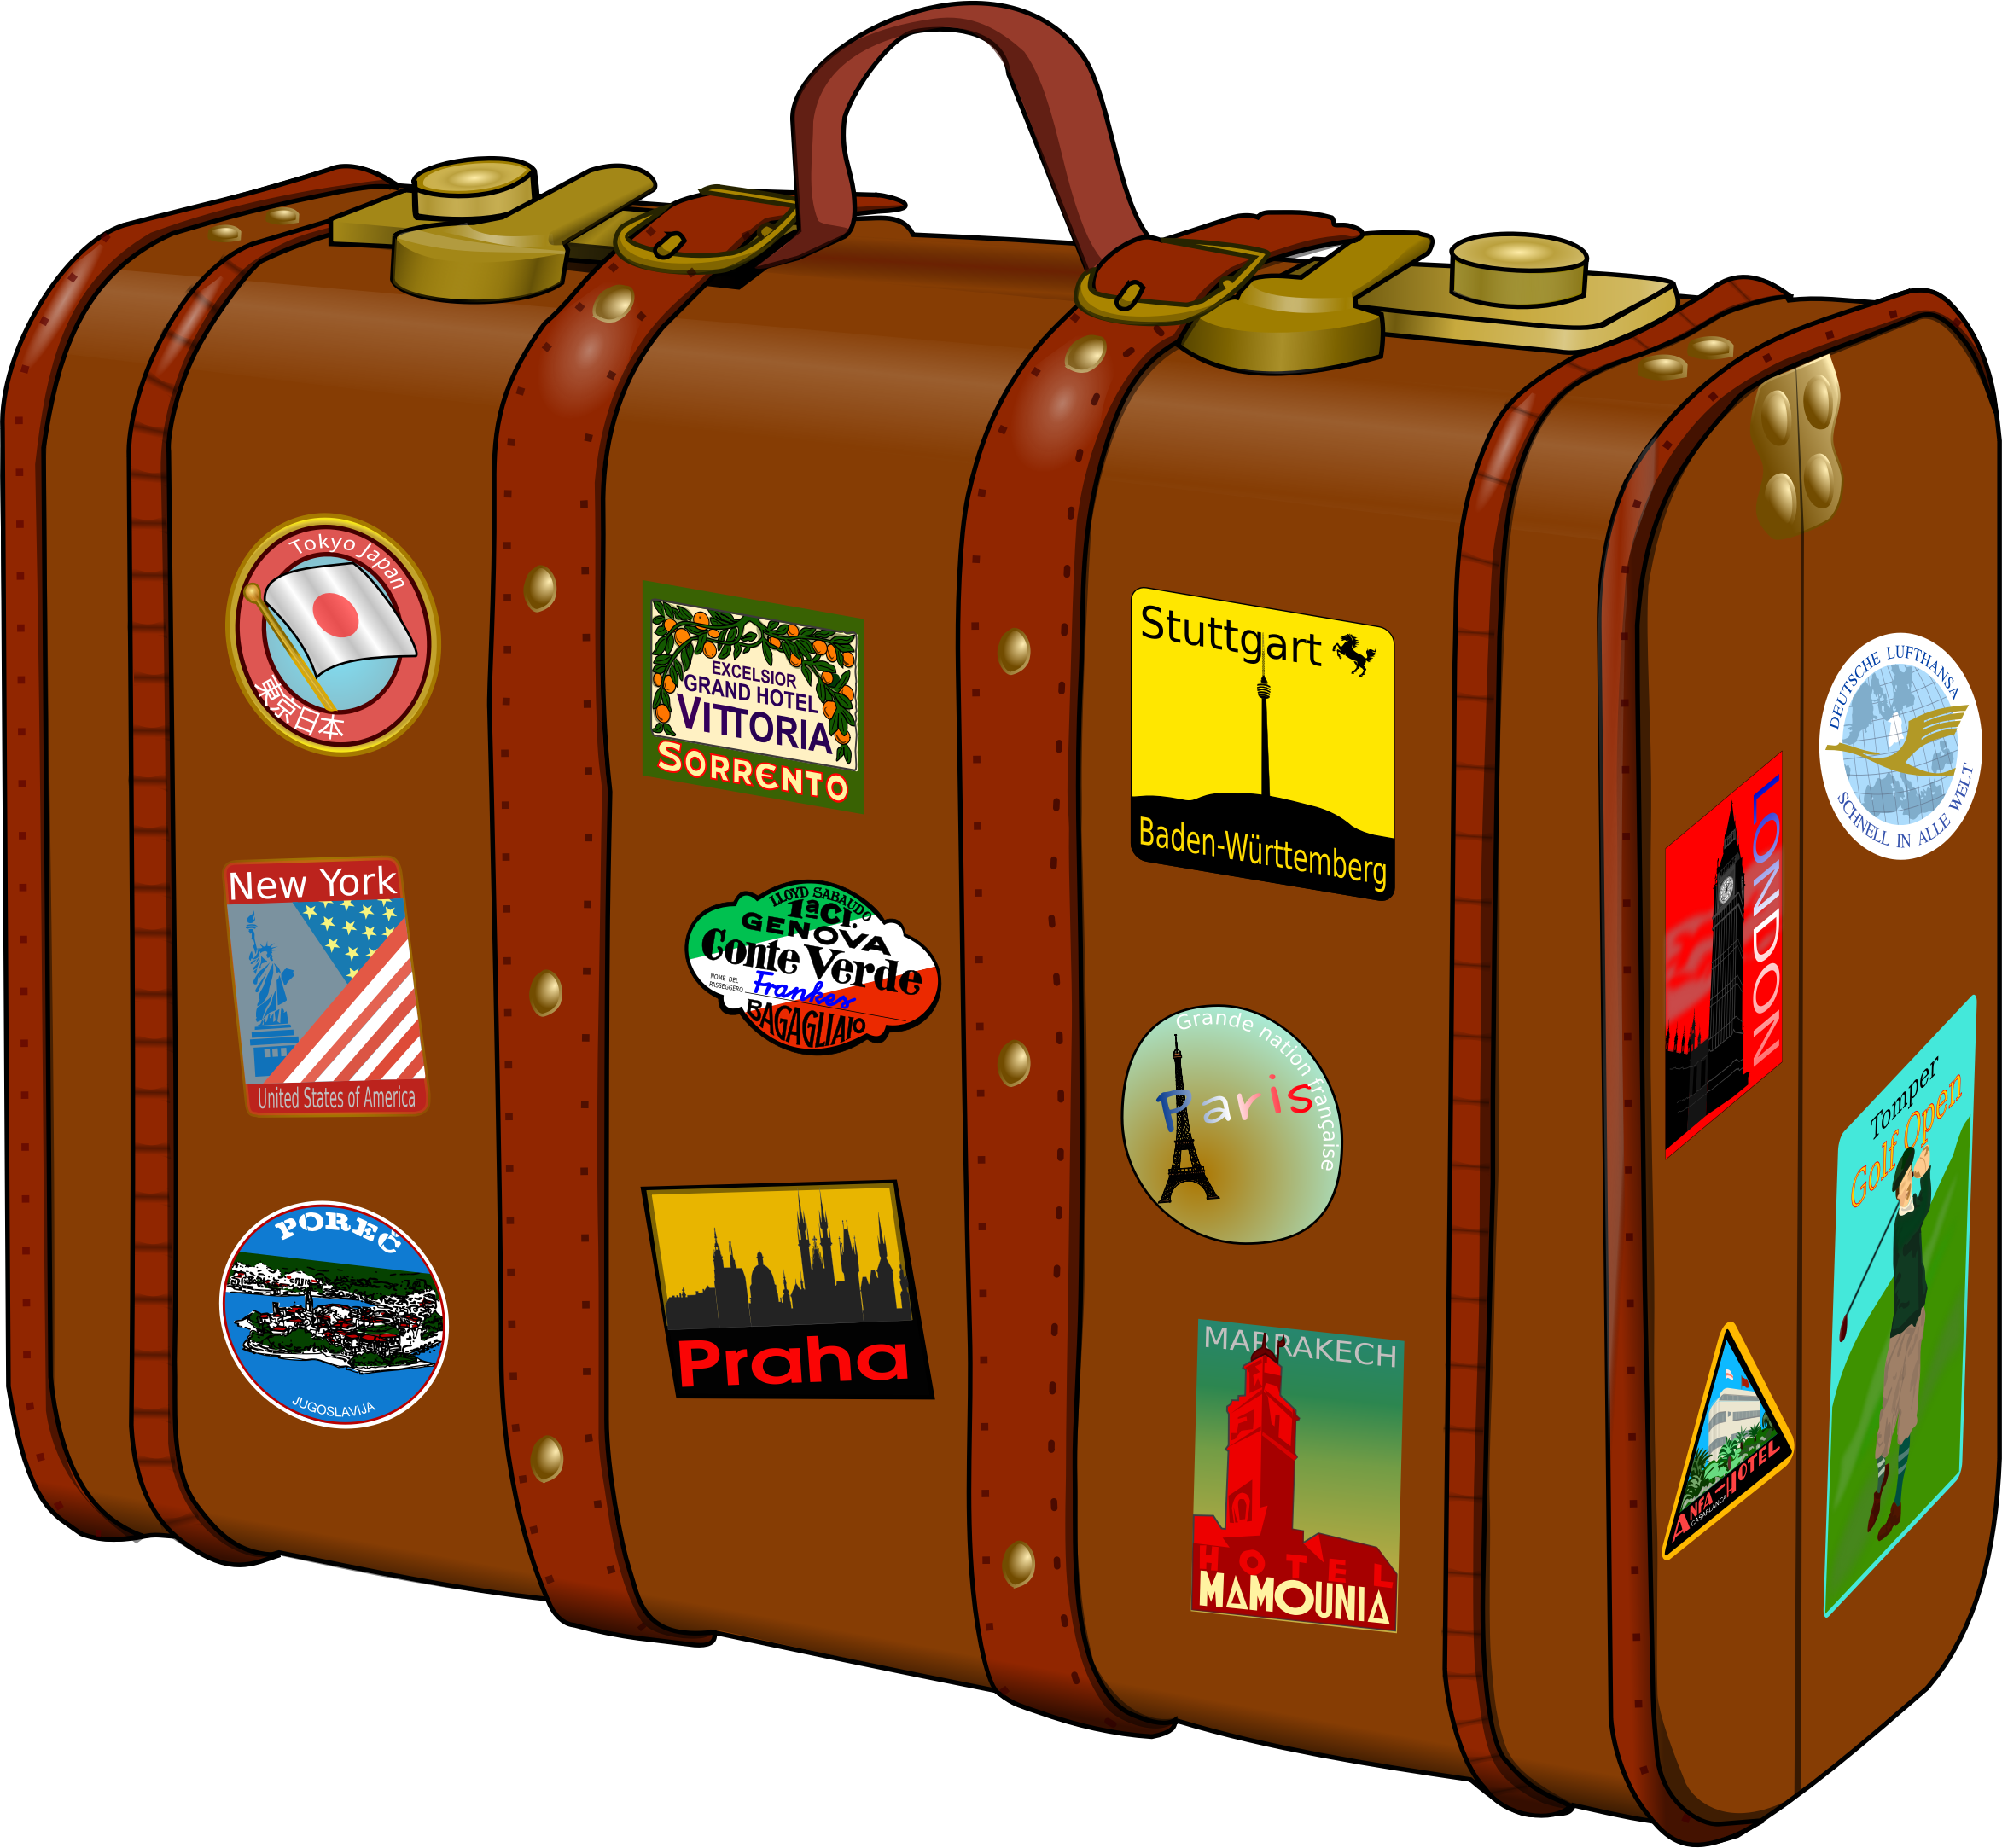 Suitcase Png Image - Suitcase, Transparent background PNG HD thumbnail